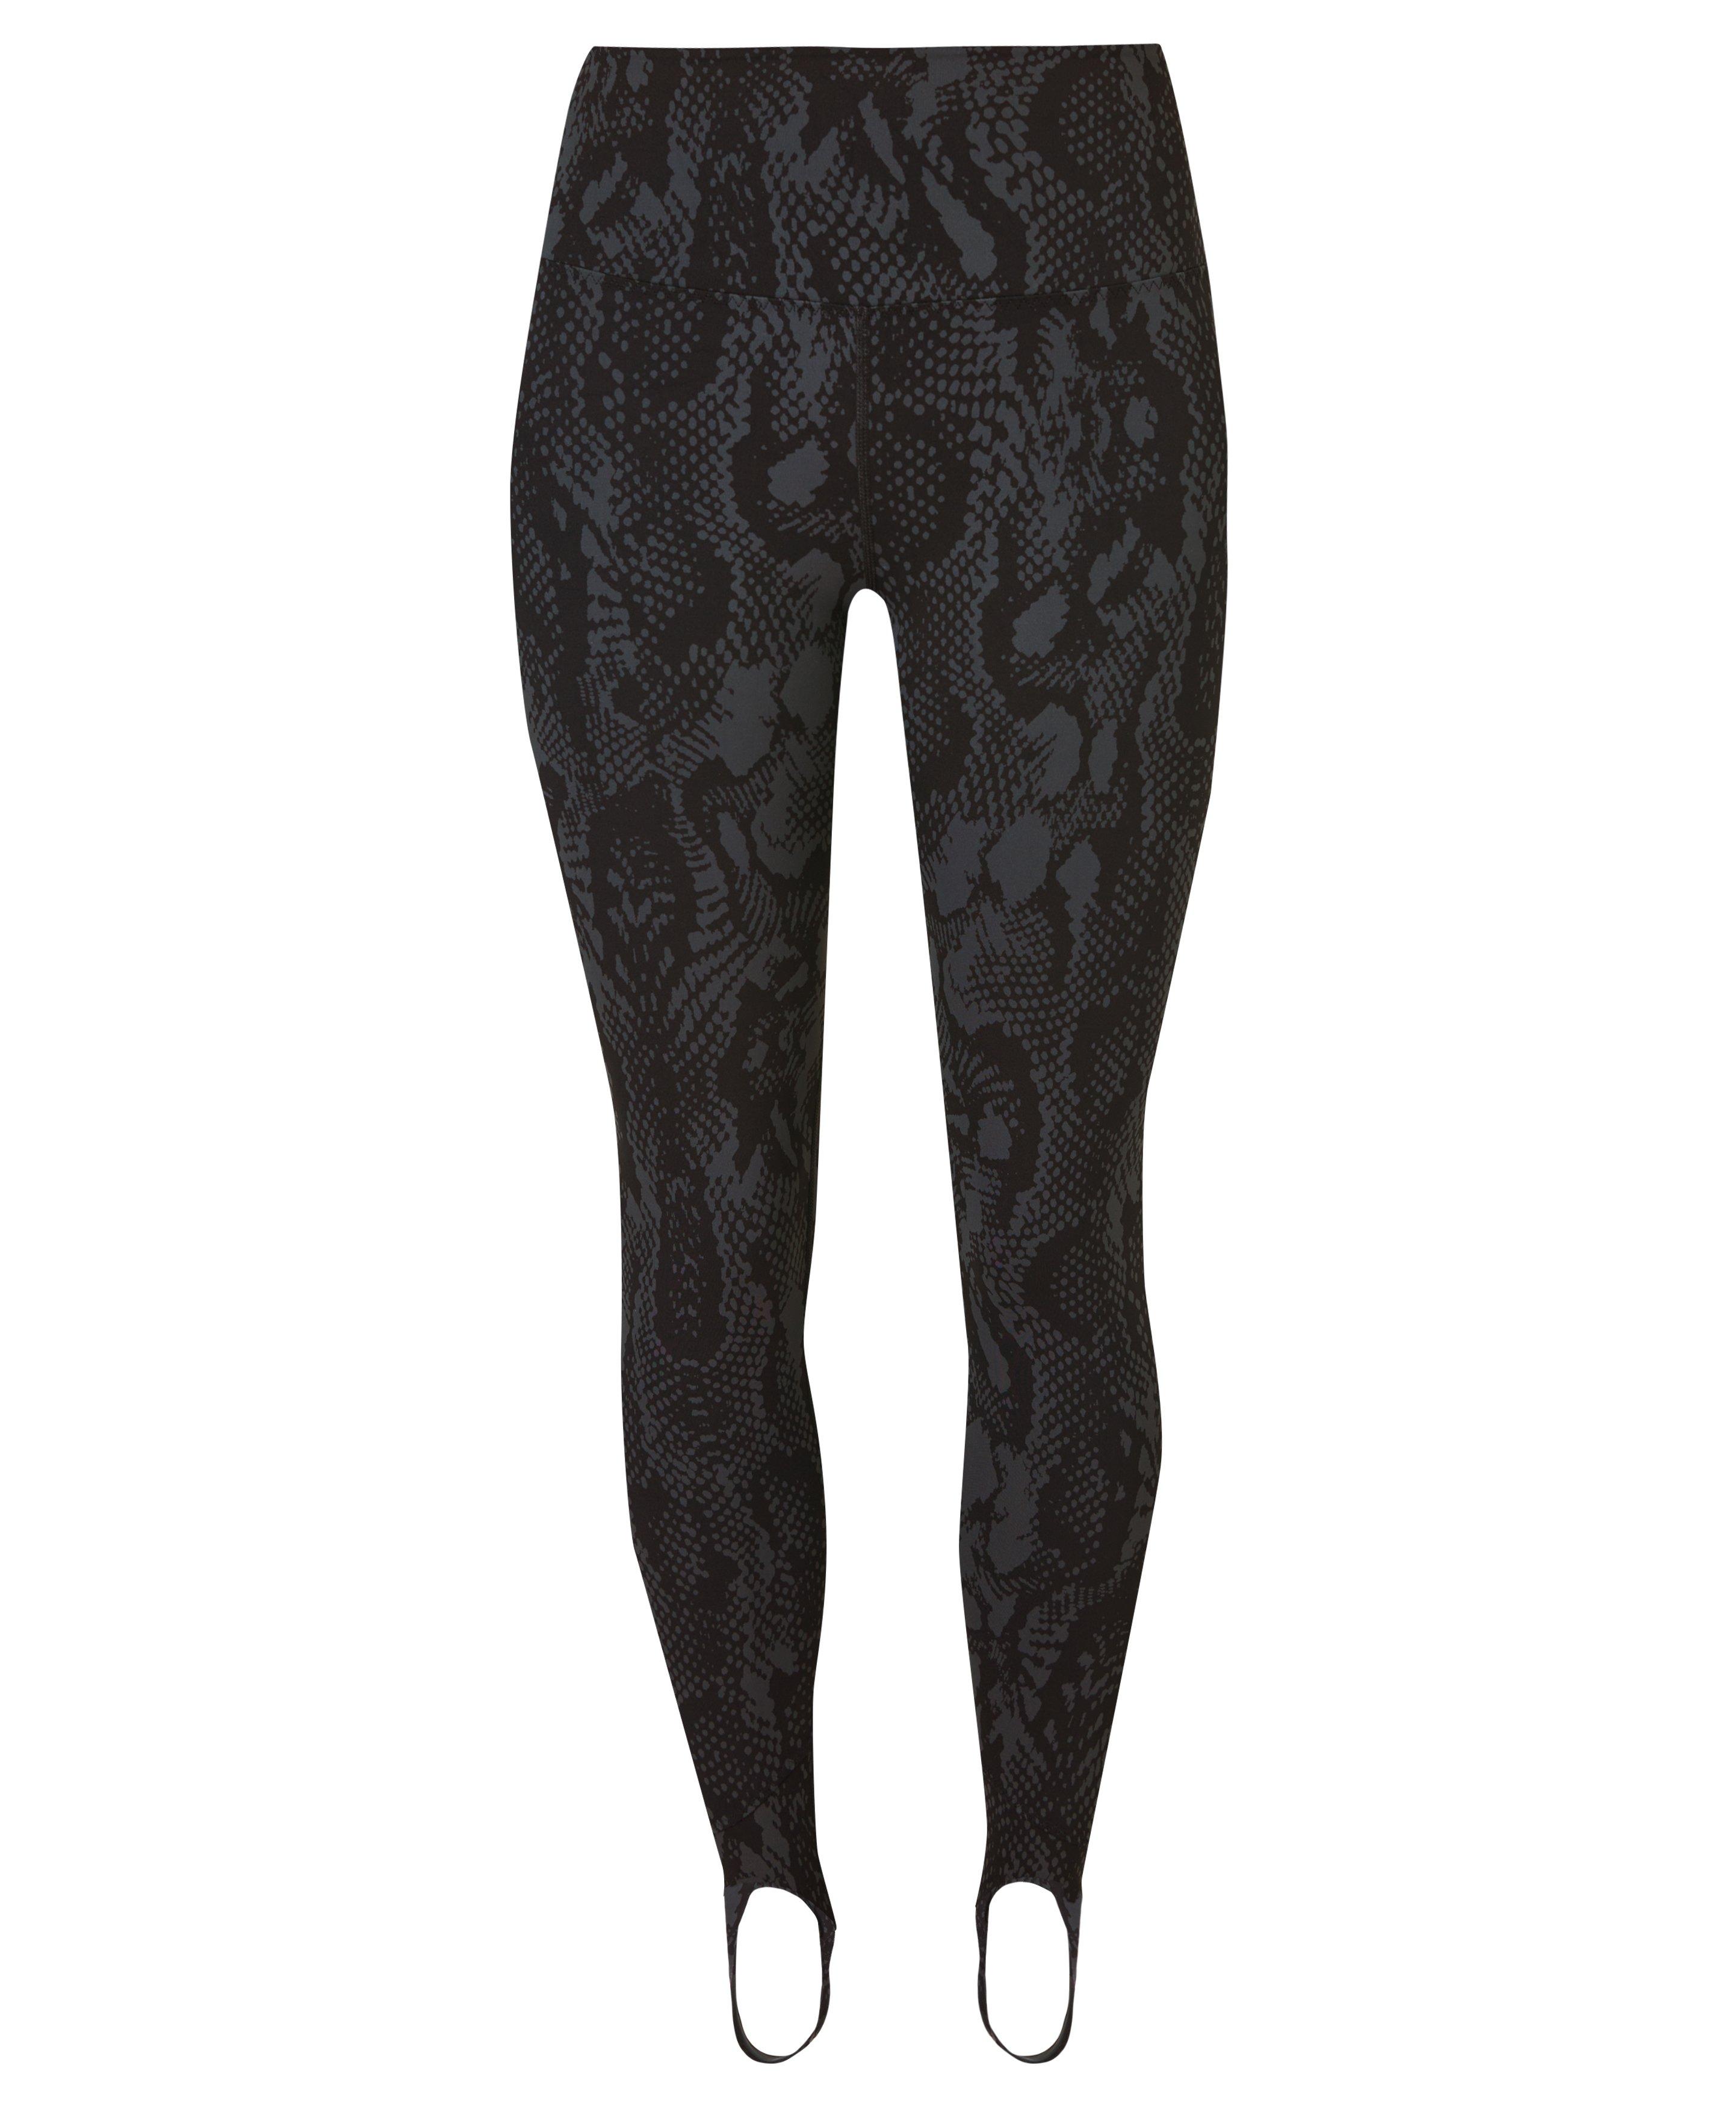  Zeronic Women's High Waist Stirrup Leggings Tights Gym Workout  Yoga Pants (Black, X-Small) : Clothing, Shoes & Jewelry